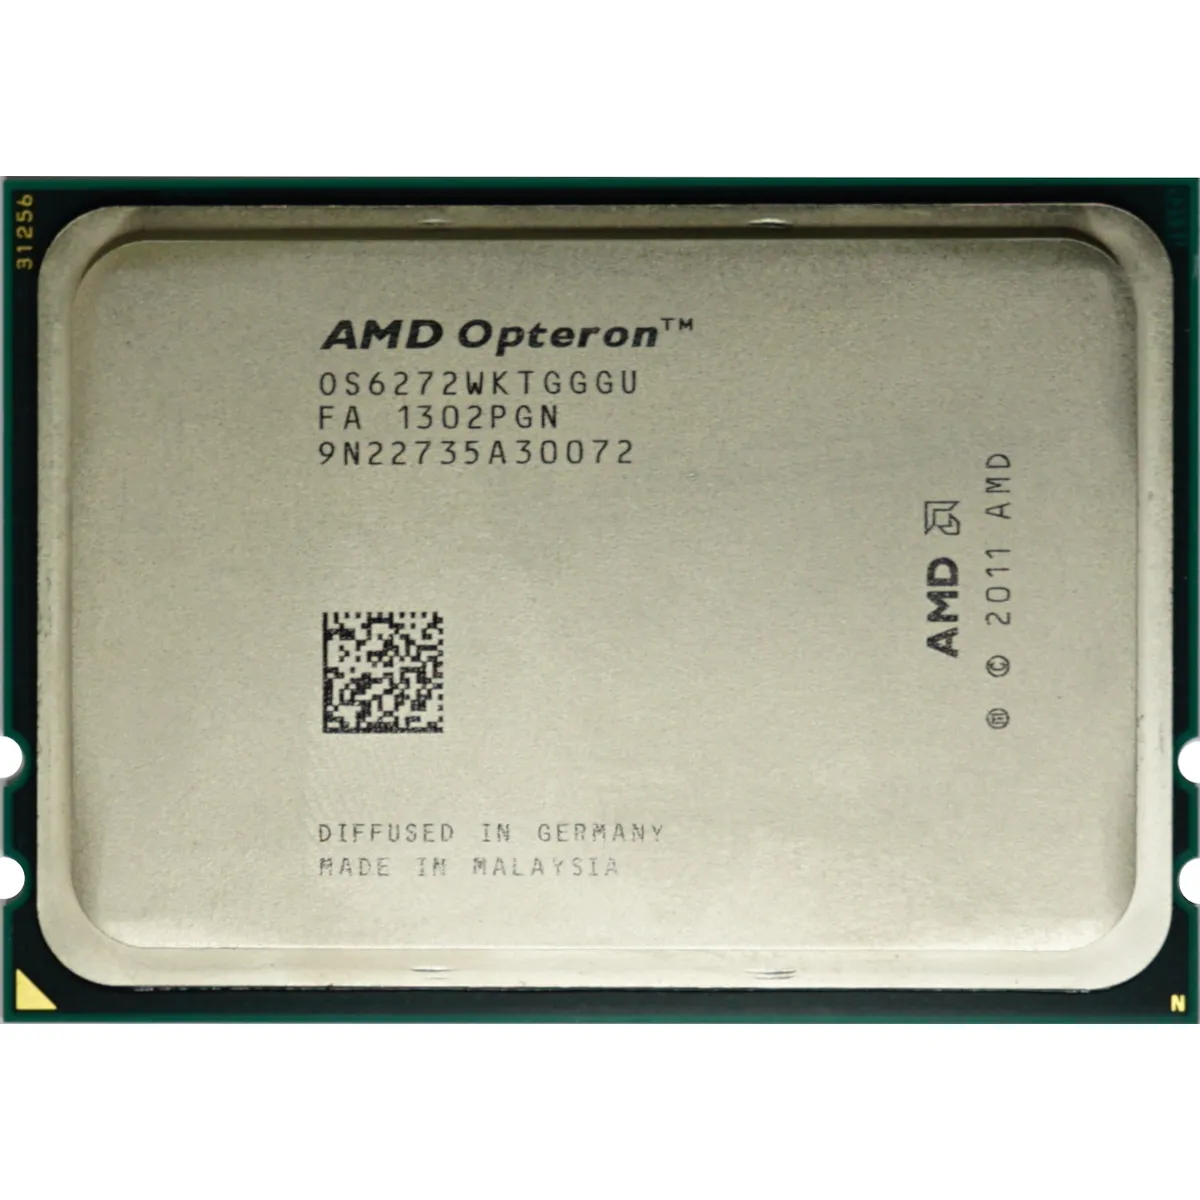 AMD Opteron 6272 (OS6272WKTGGGU) 2.10Ghz Sixteen (16) Core CPU